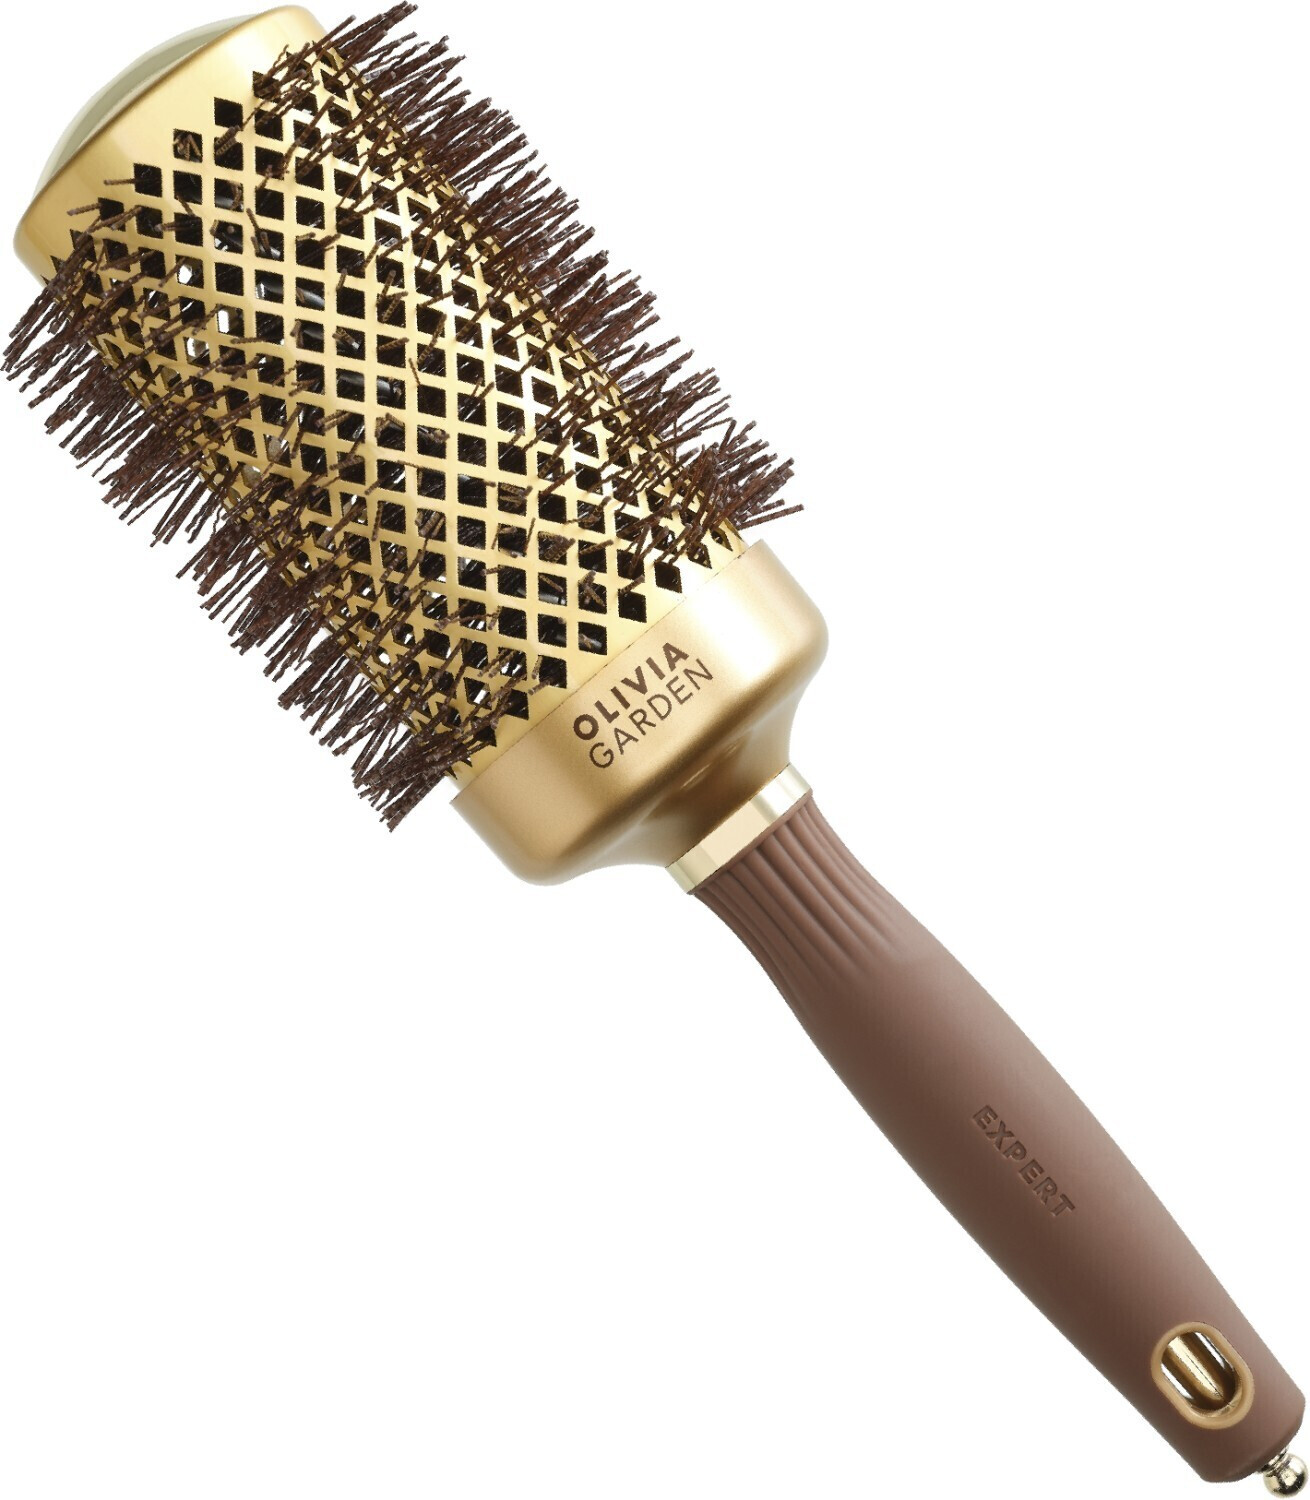 Photos - Comb Olivia Garden Expert Blowout Shine Gold & Brown 55mm 